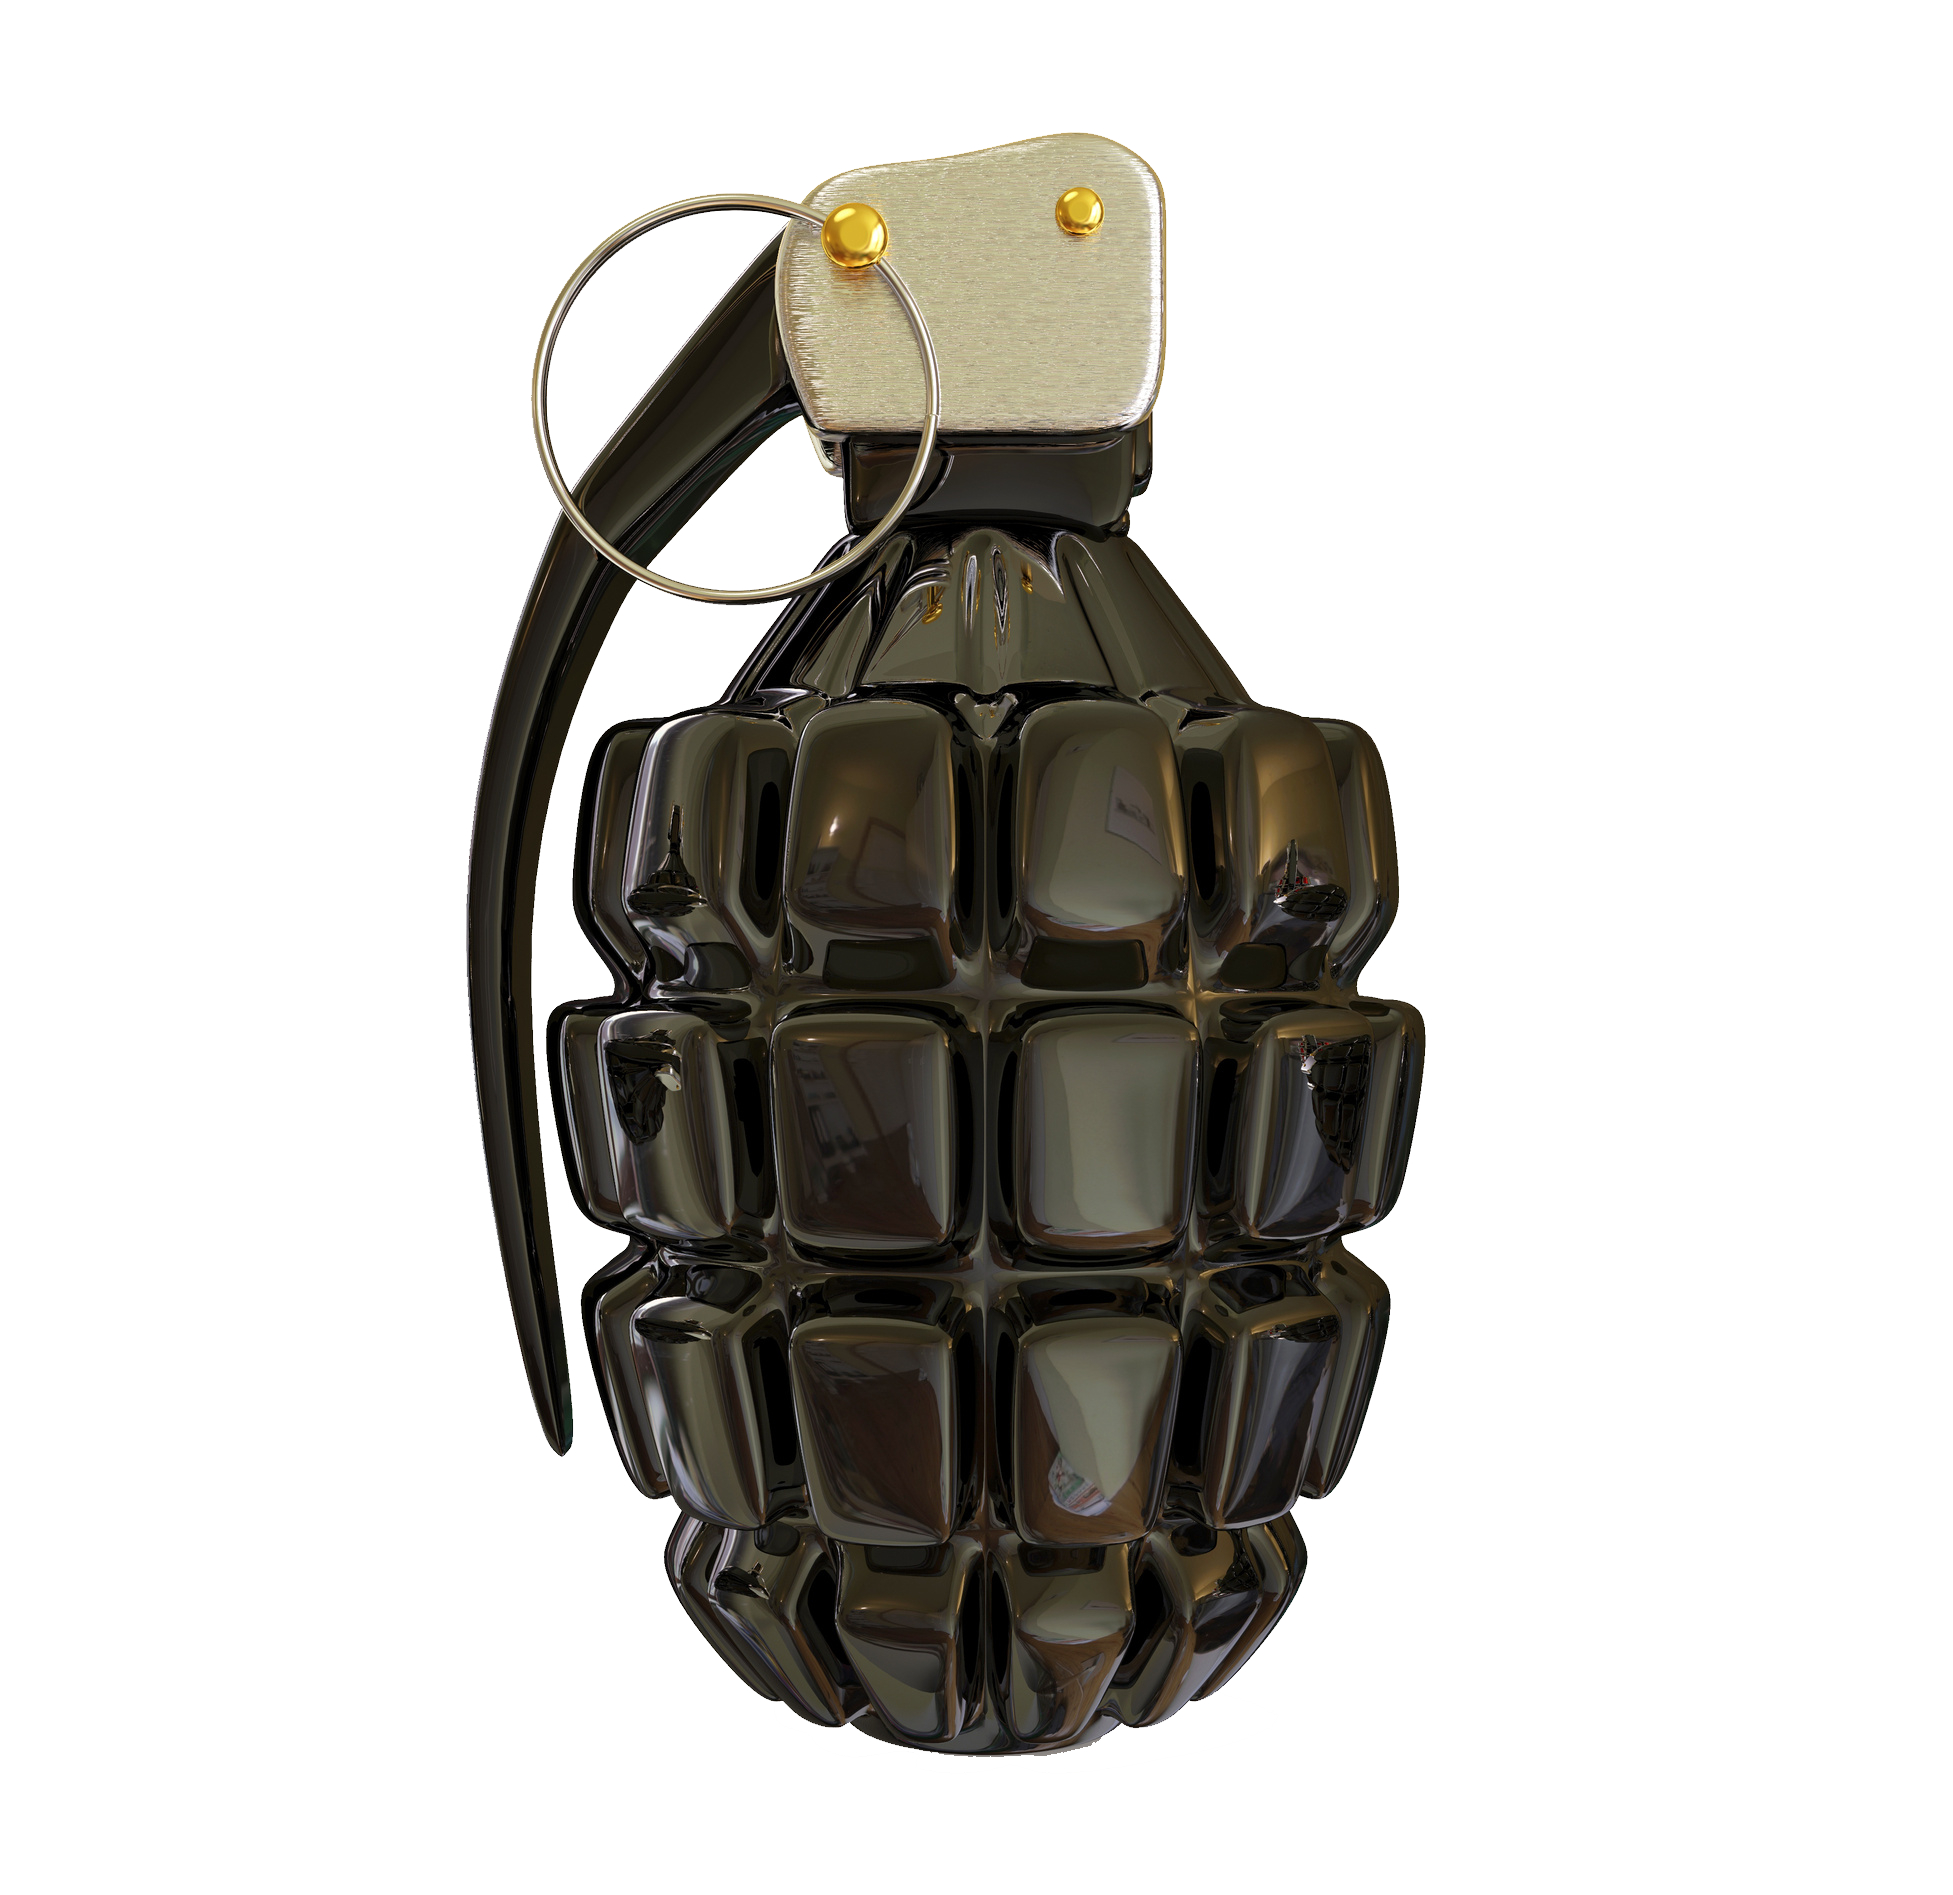 Grenade PNG image free Download 